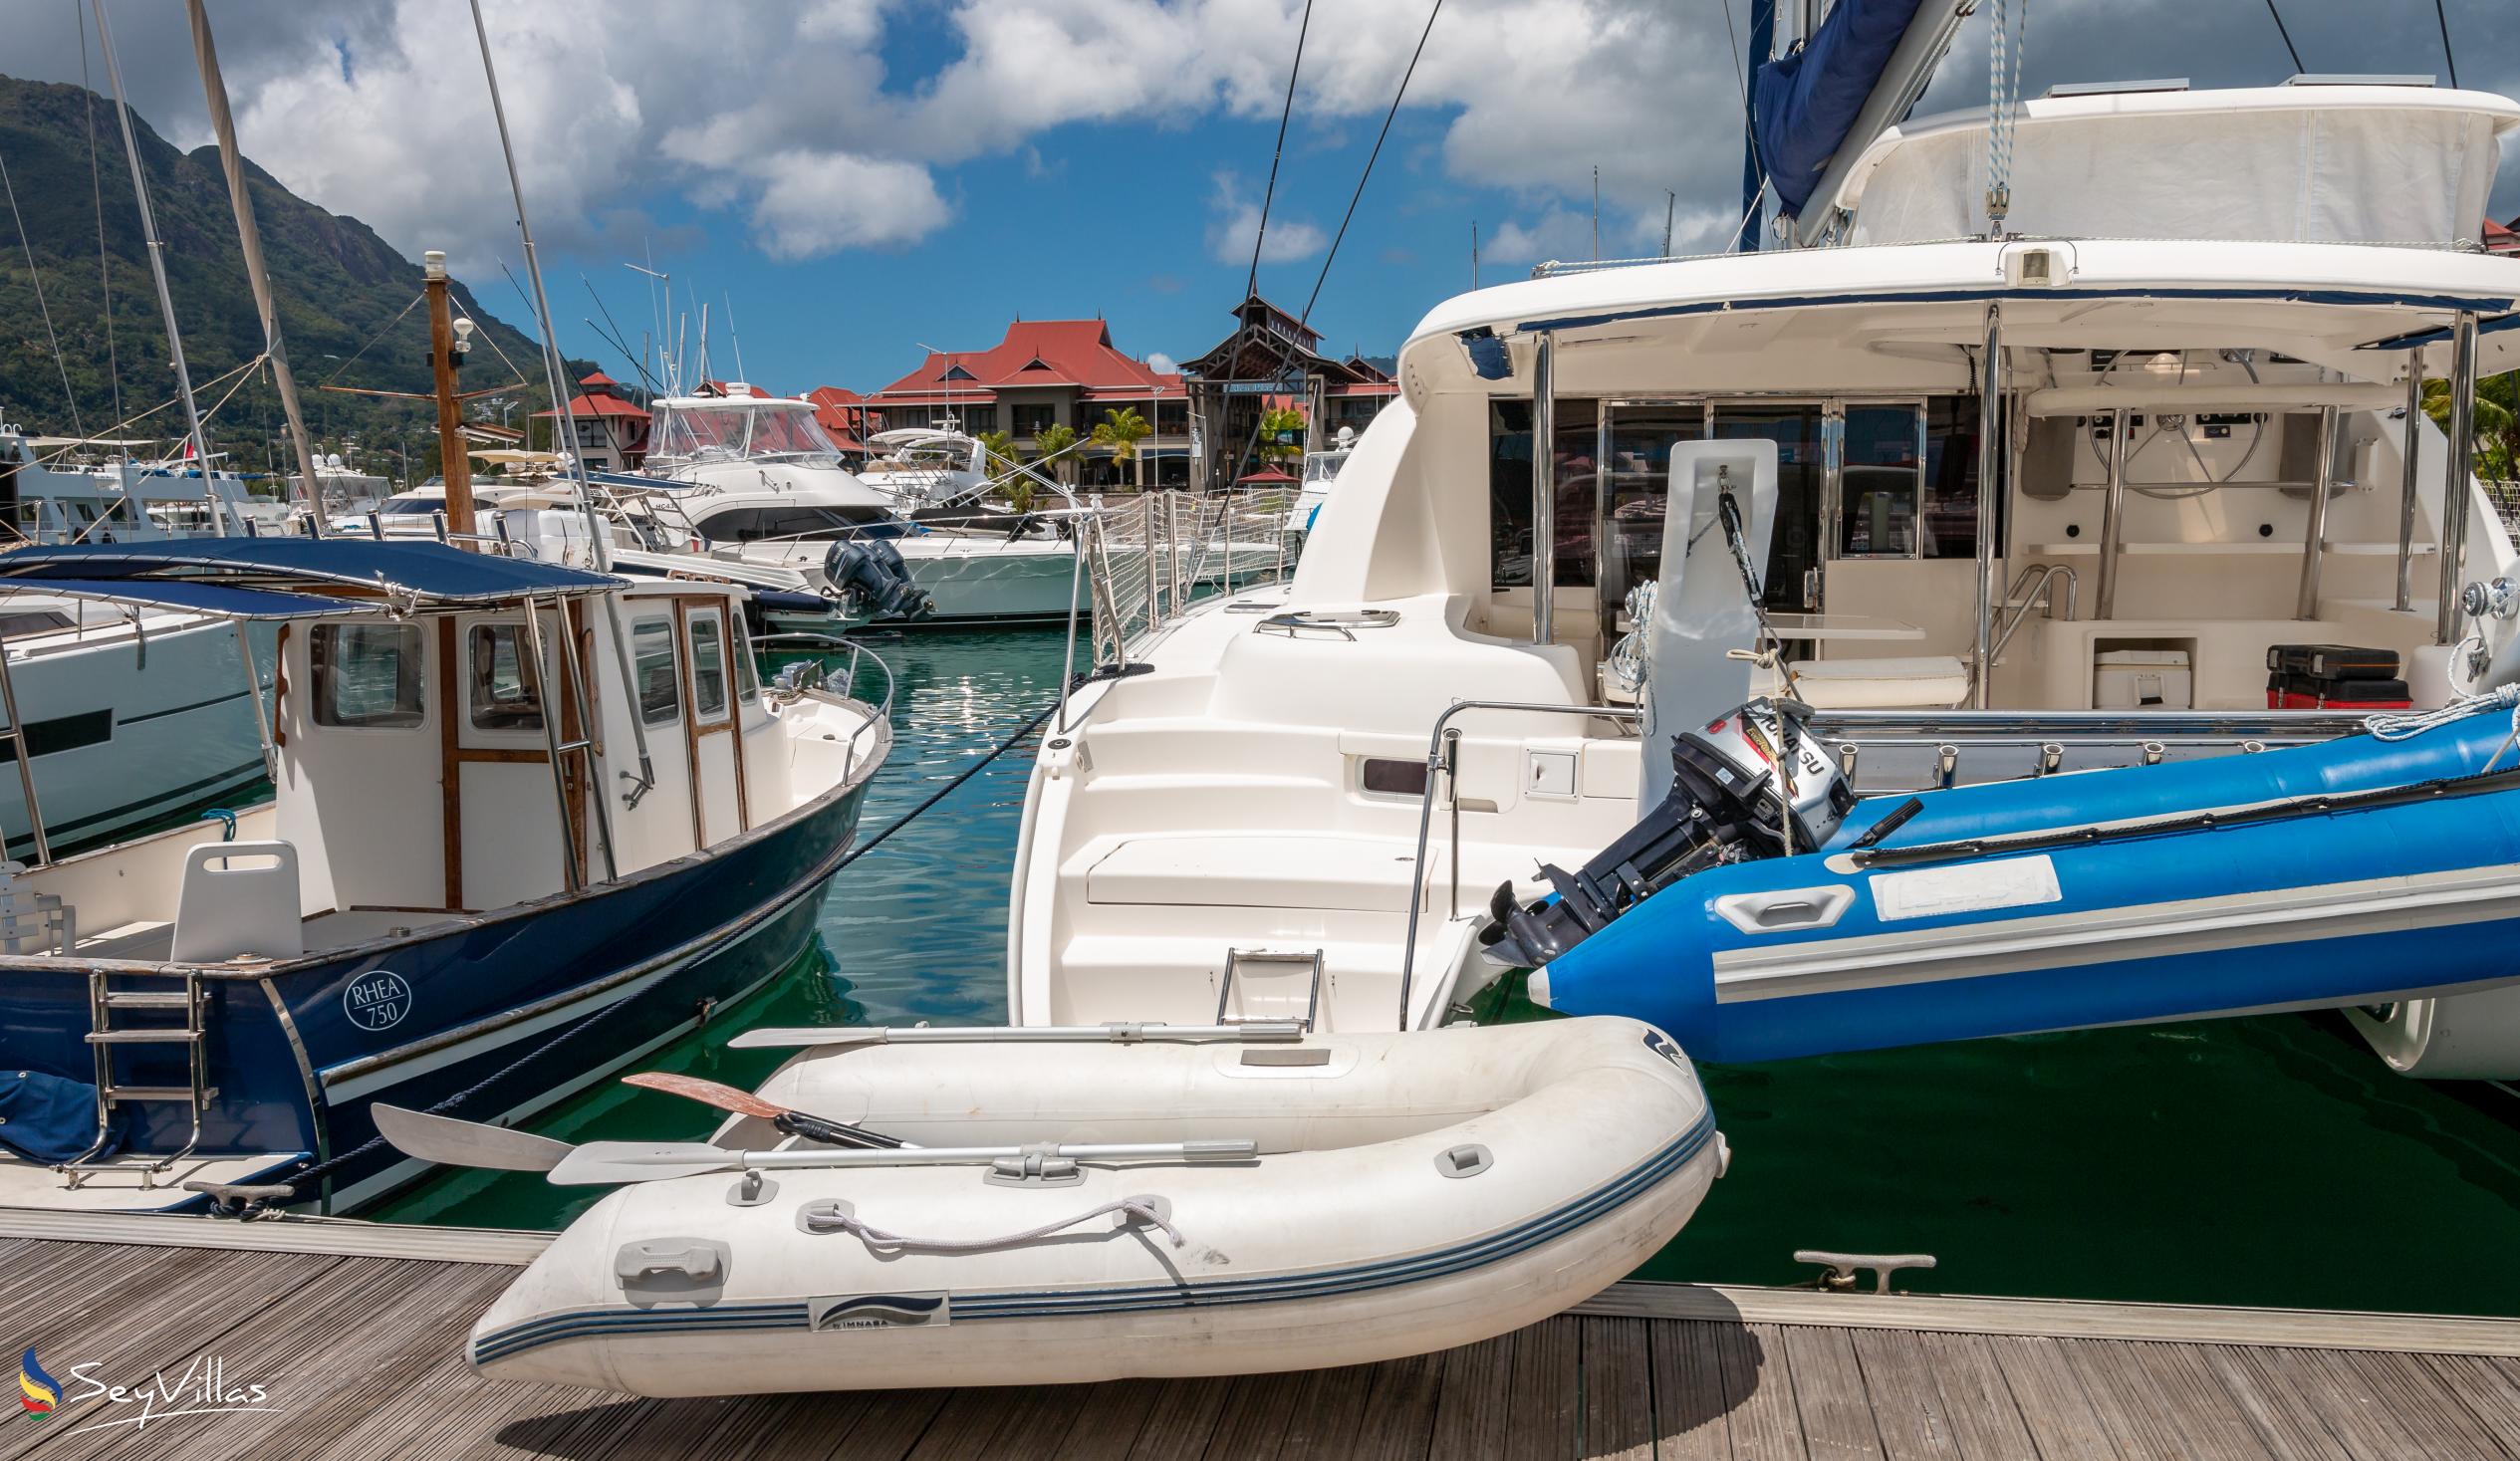 Photo 29: Dream Yacht Praslin Dream - Outdoor area - Seychelles (Seychelles)